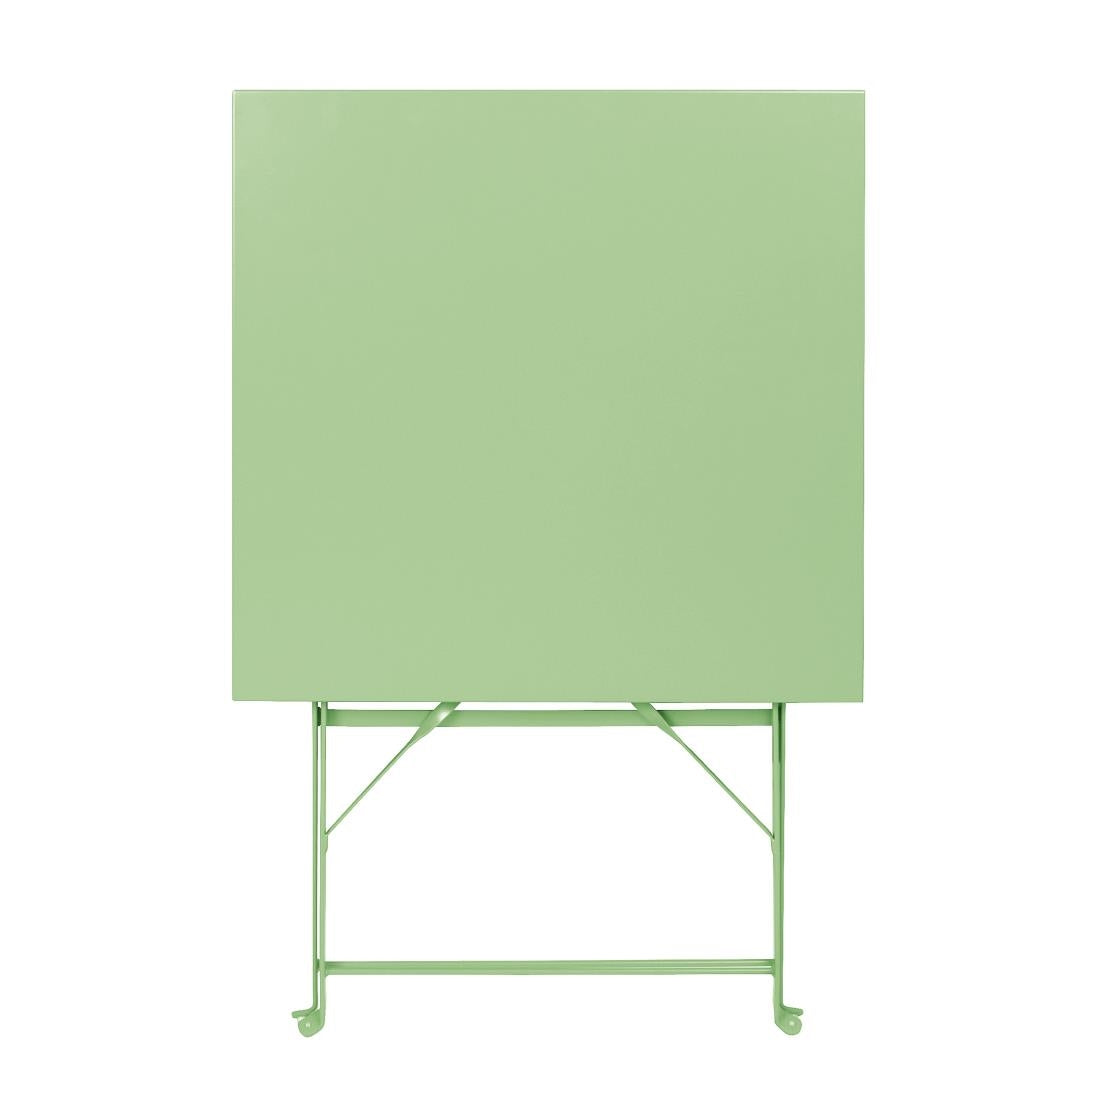 FT271 Bolero Square Pavement Style Steel Folding Table Light Green 600mm JD Catering Equipment Solutions Ltd